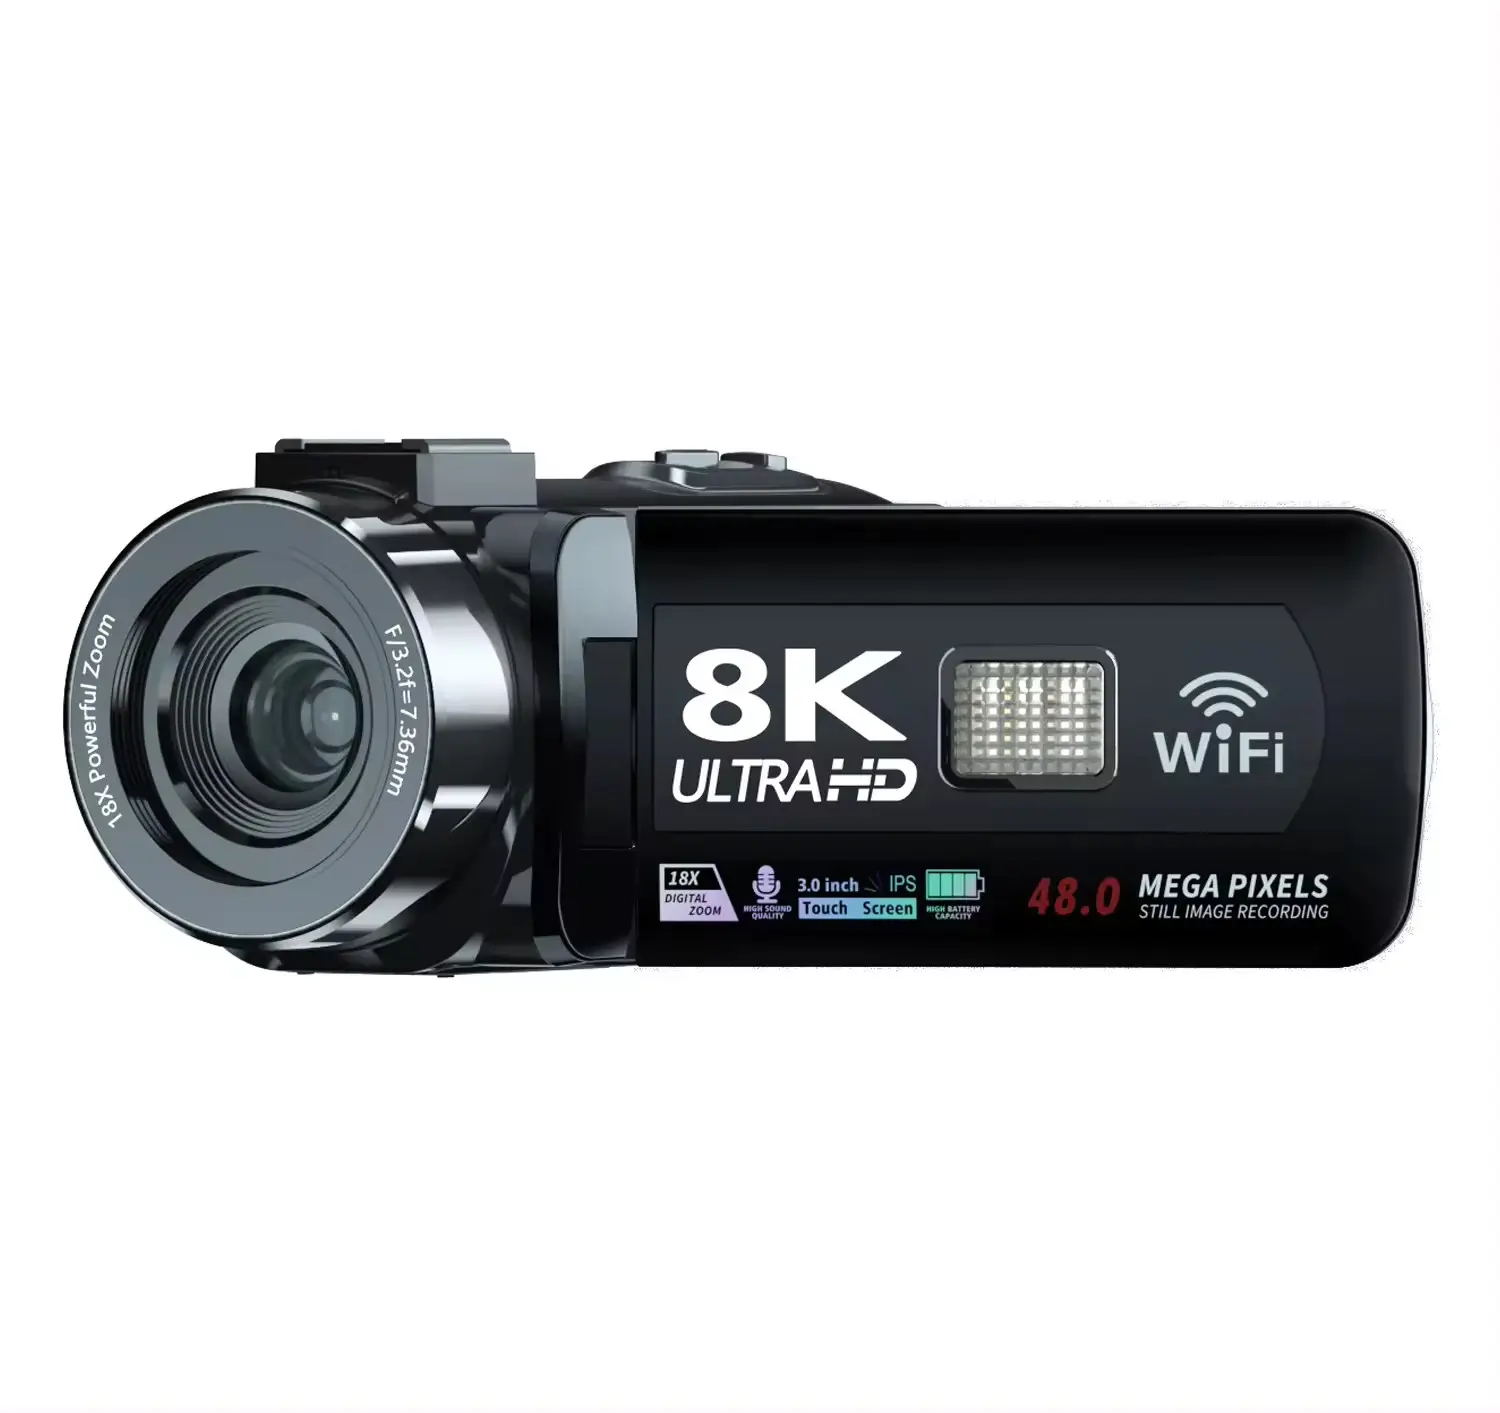 8KLCDタッチスクリーン18倍デジタルズームビデオカメラレコーダーUltraHDWIFIポータブル録画カムコーダー